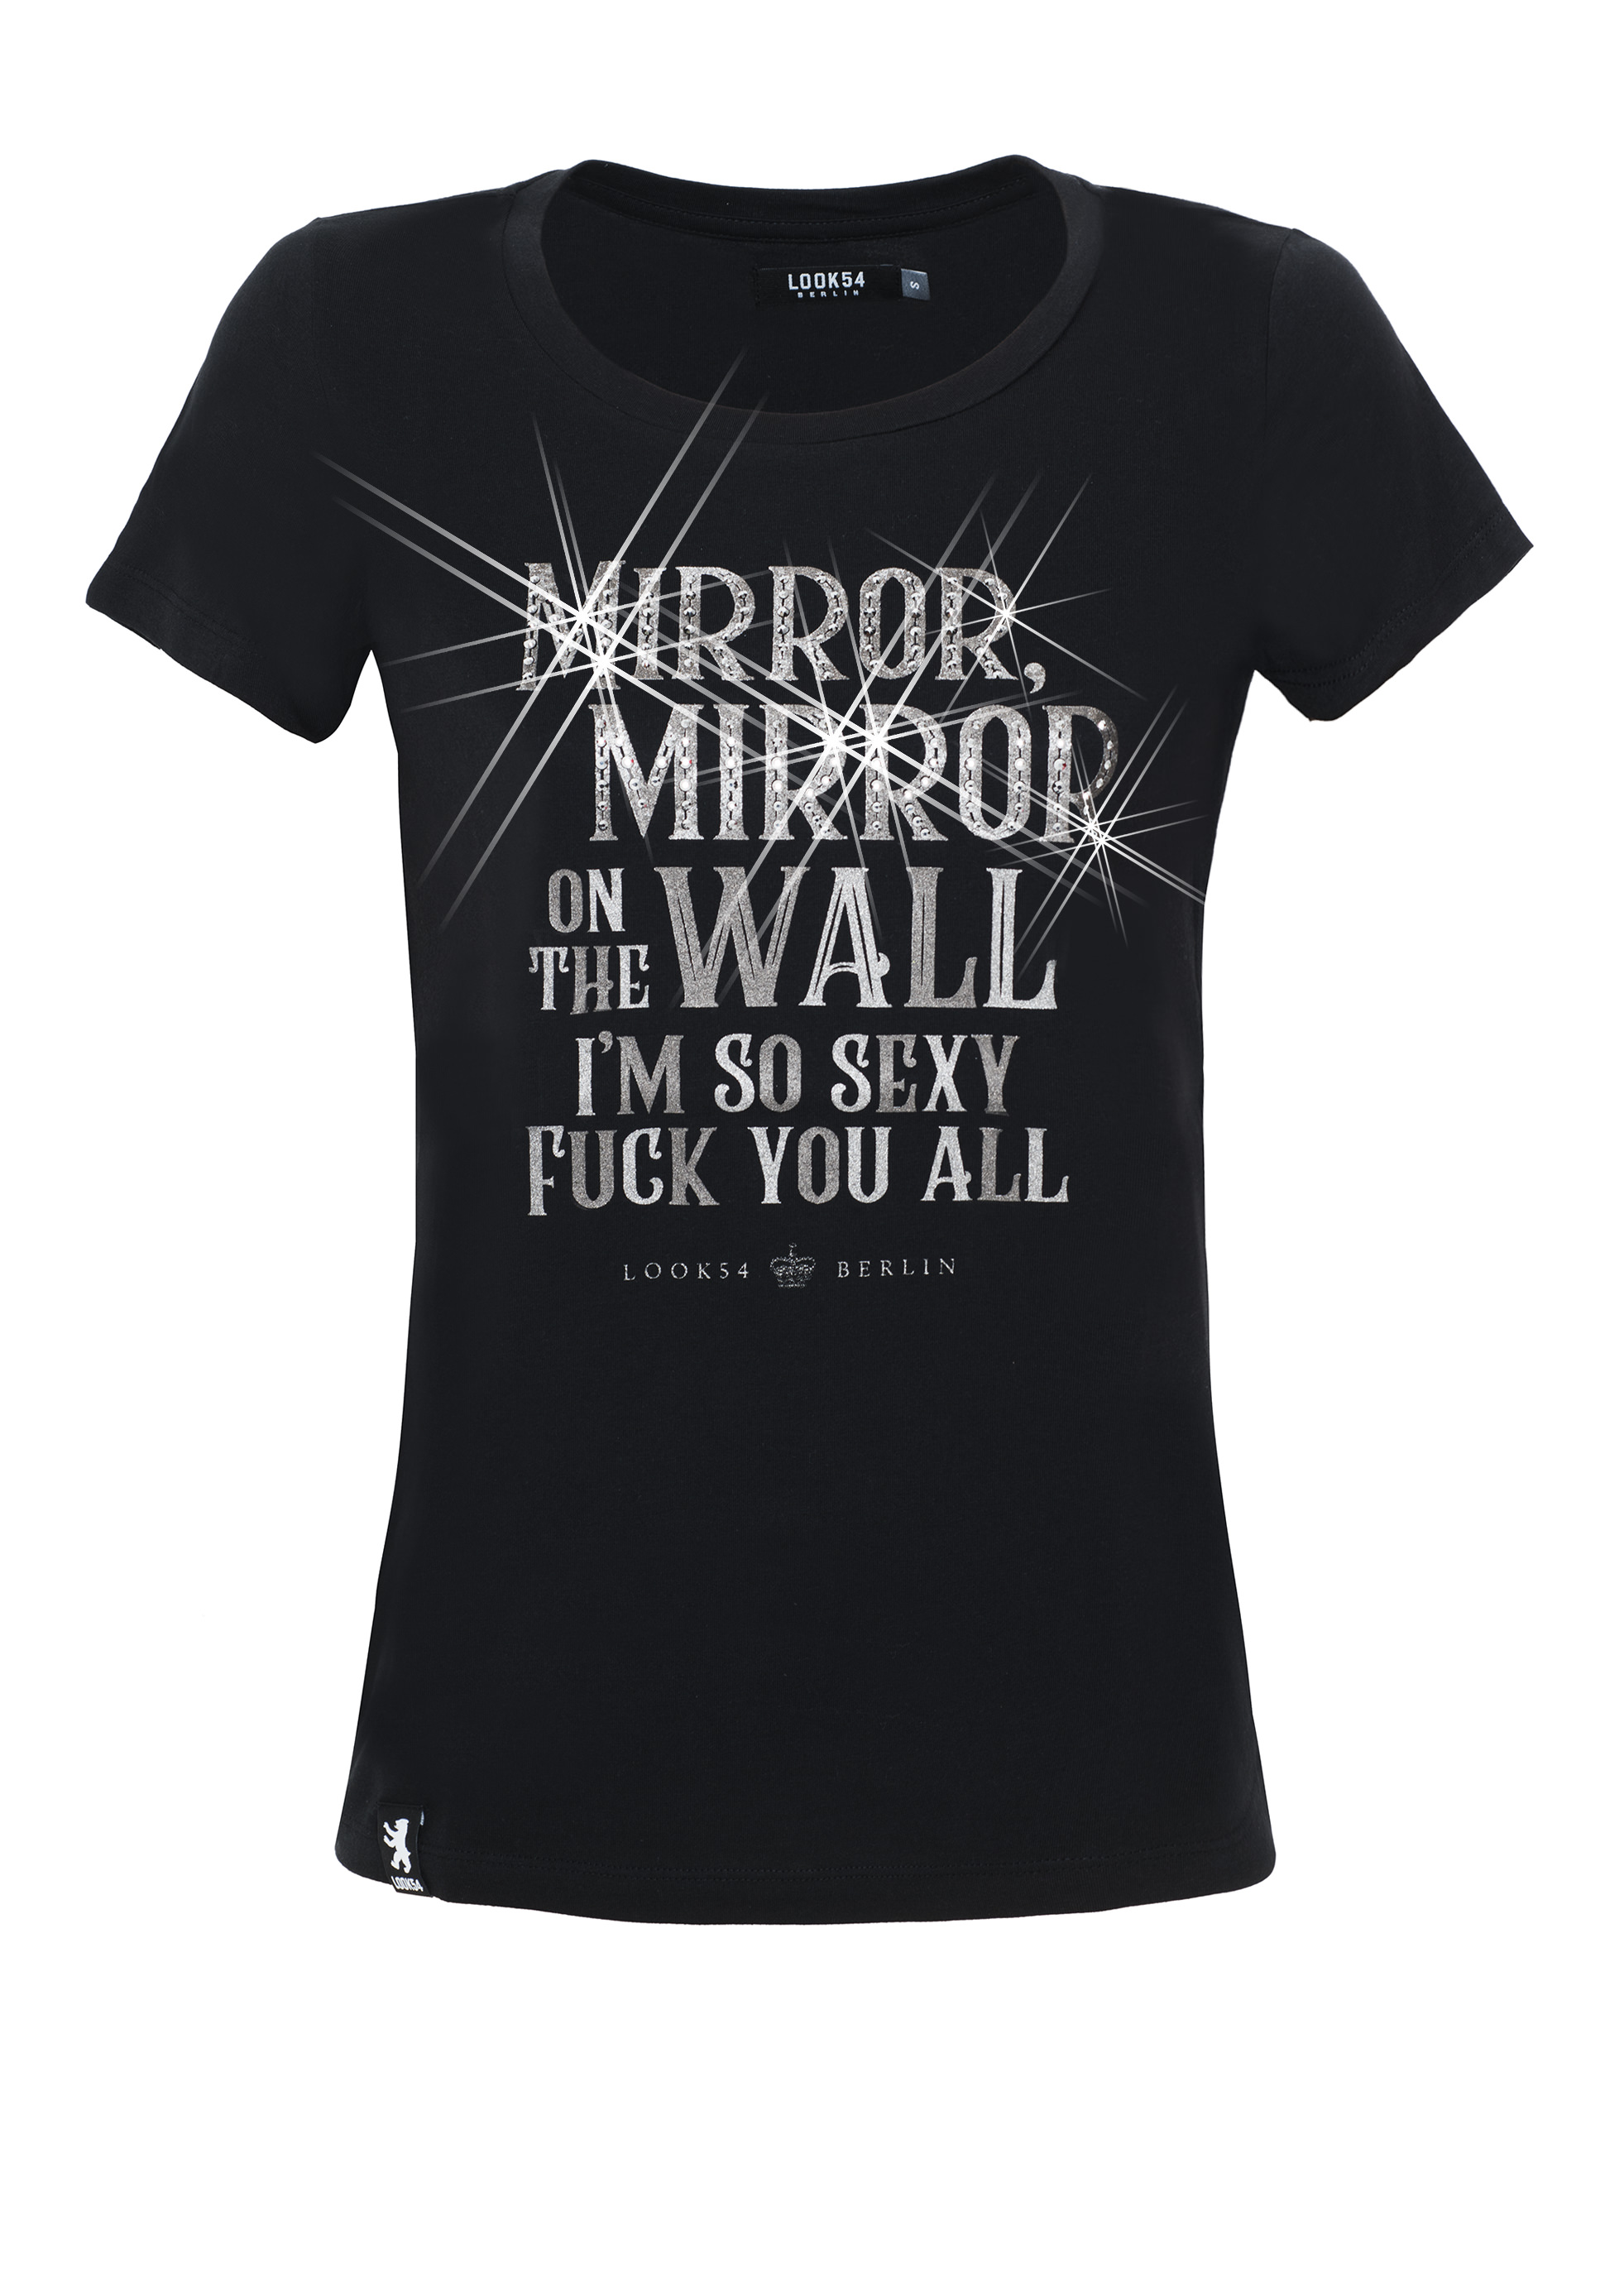 Mirror Mirror on the Wall Shirt